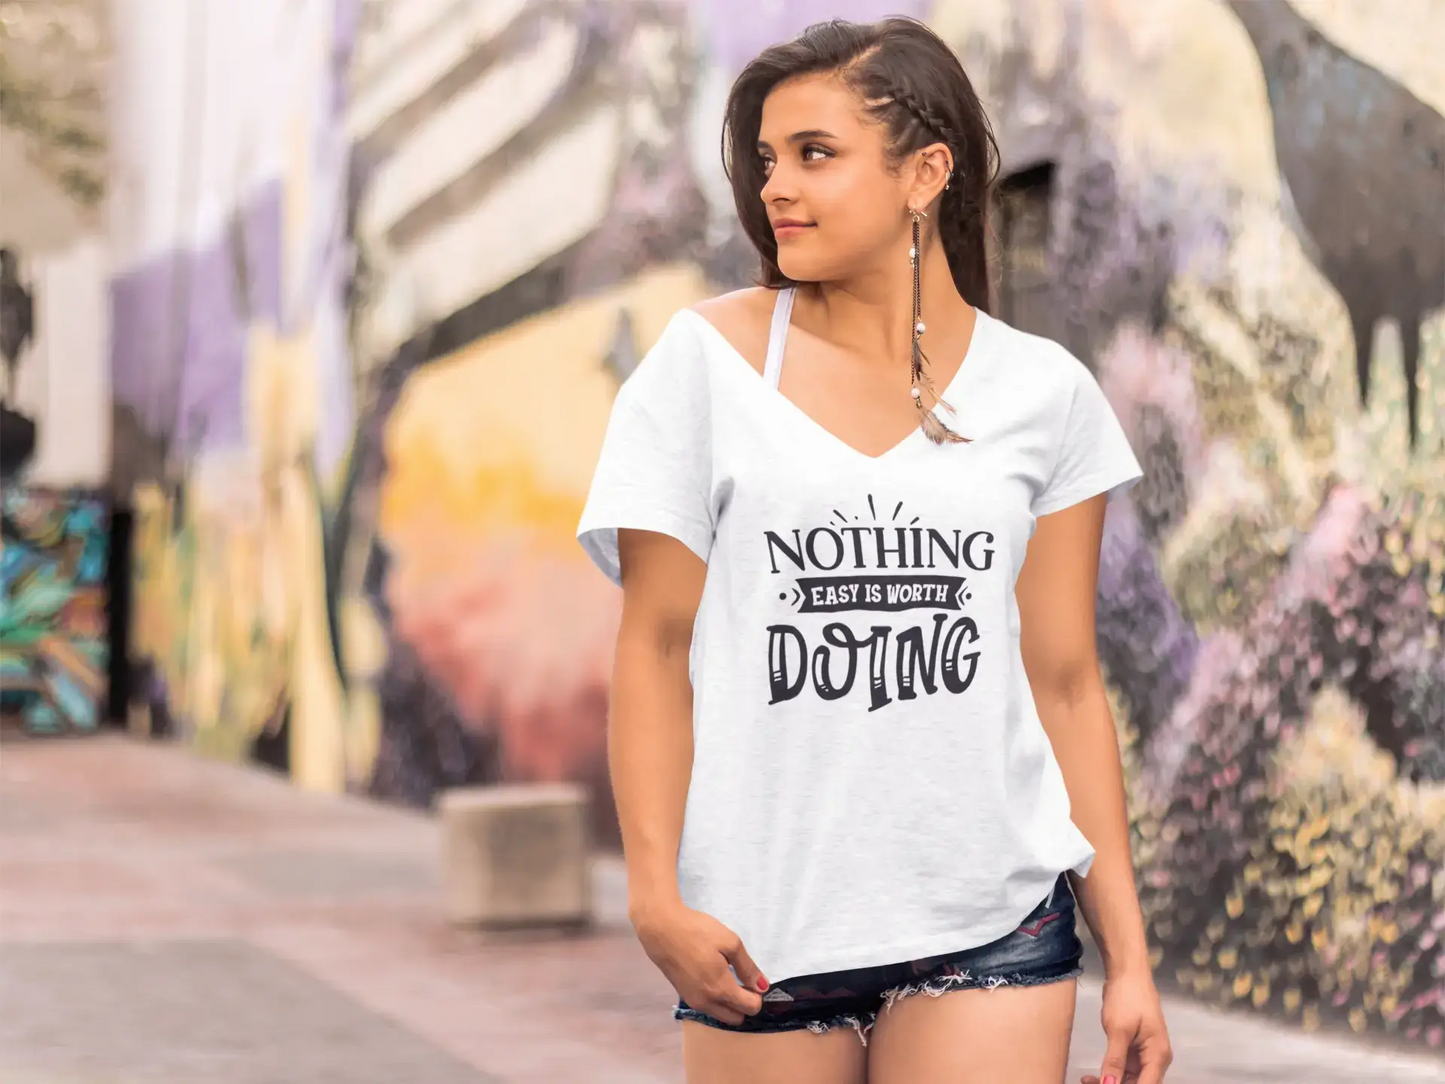 ULTRABASIC Women's T-Shirt Nothing Easy is Worth Doing - Slogan Short Sleeve Tee Shirt Tops